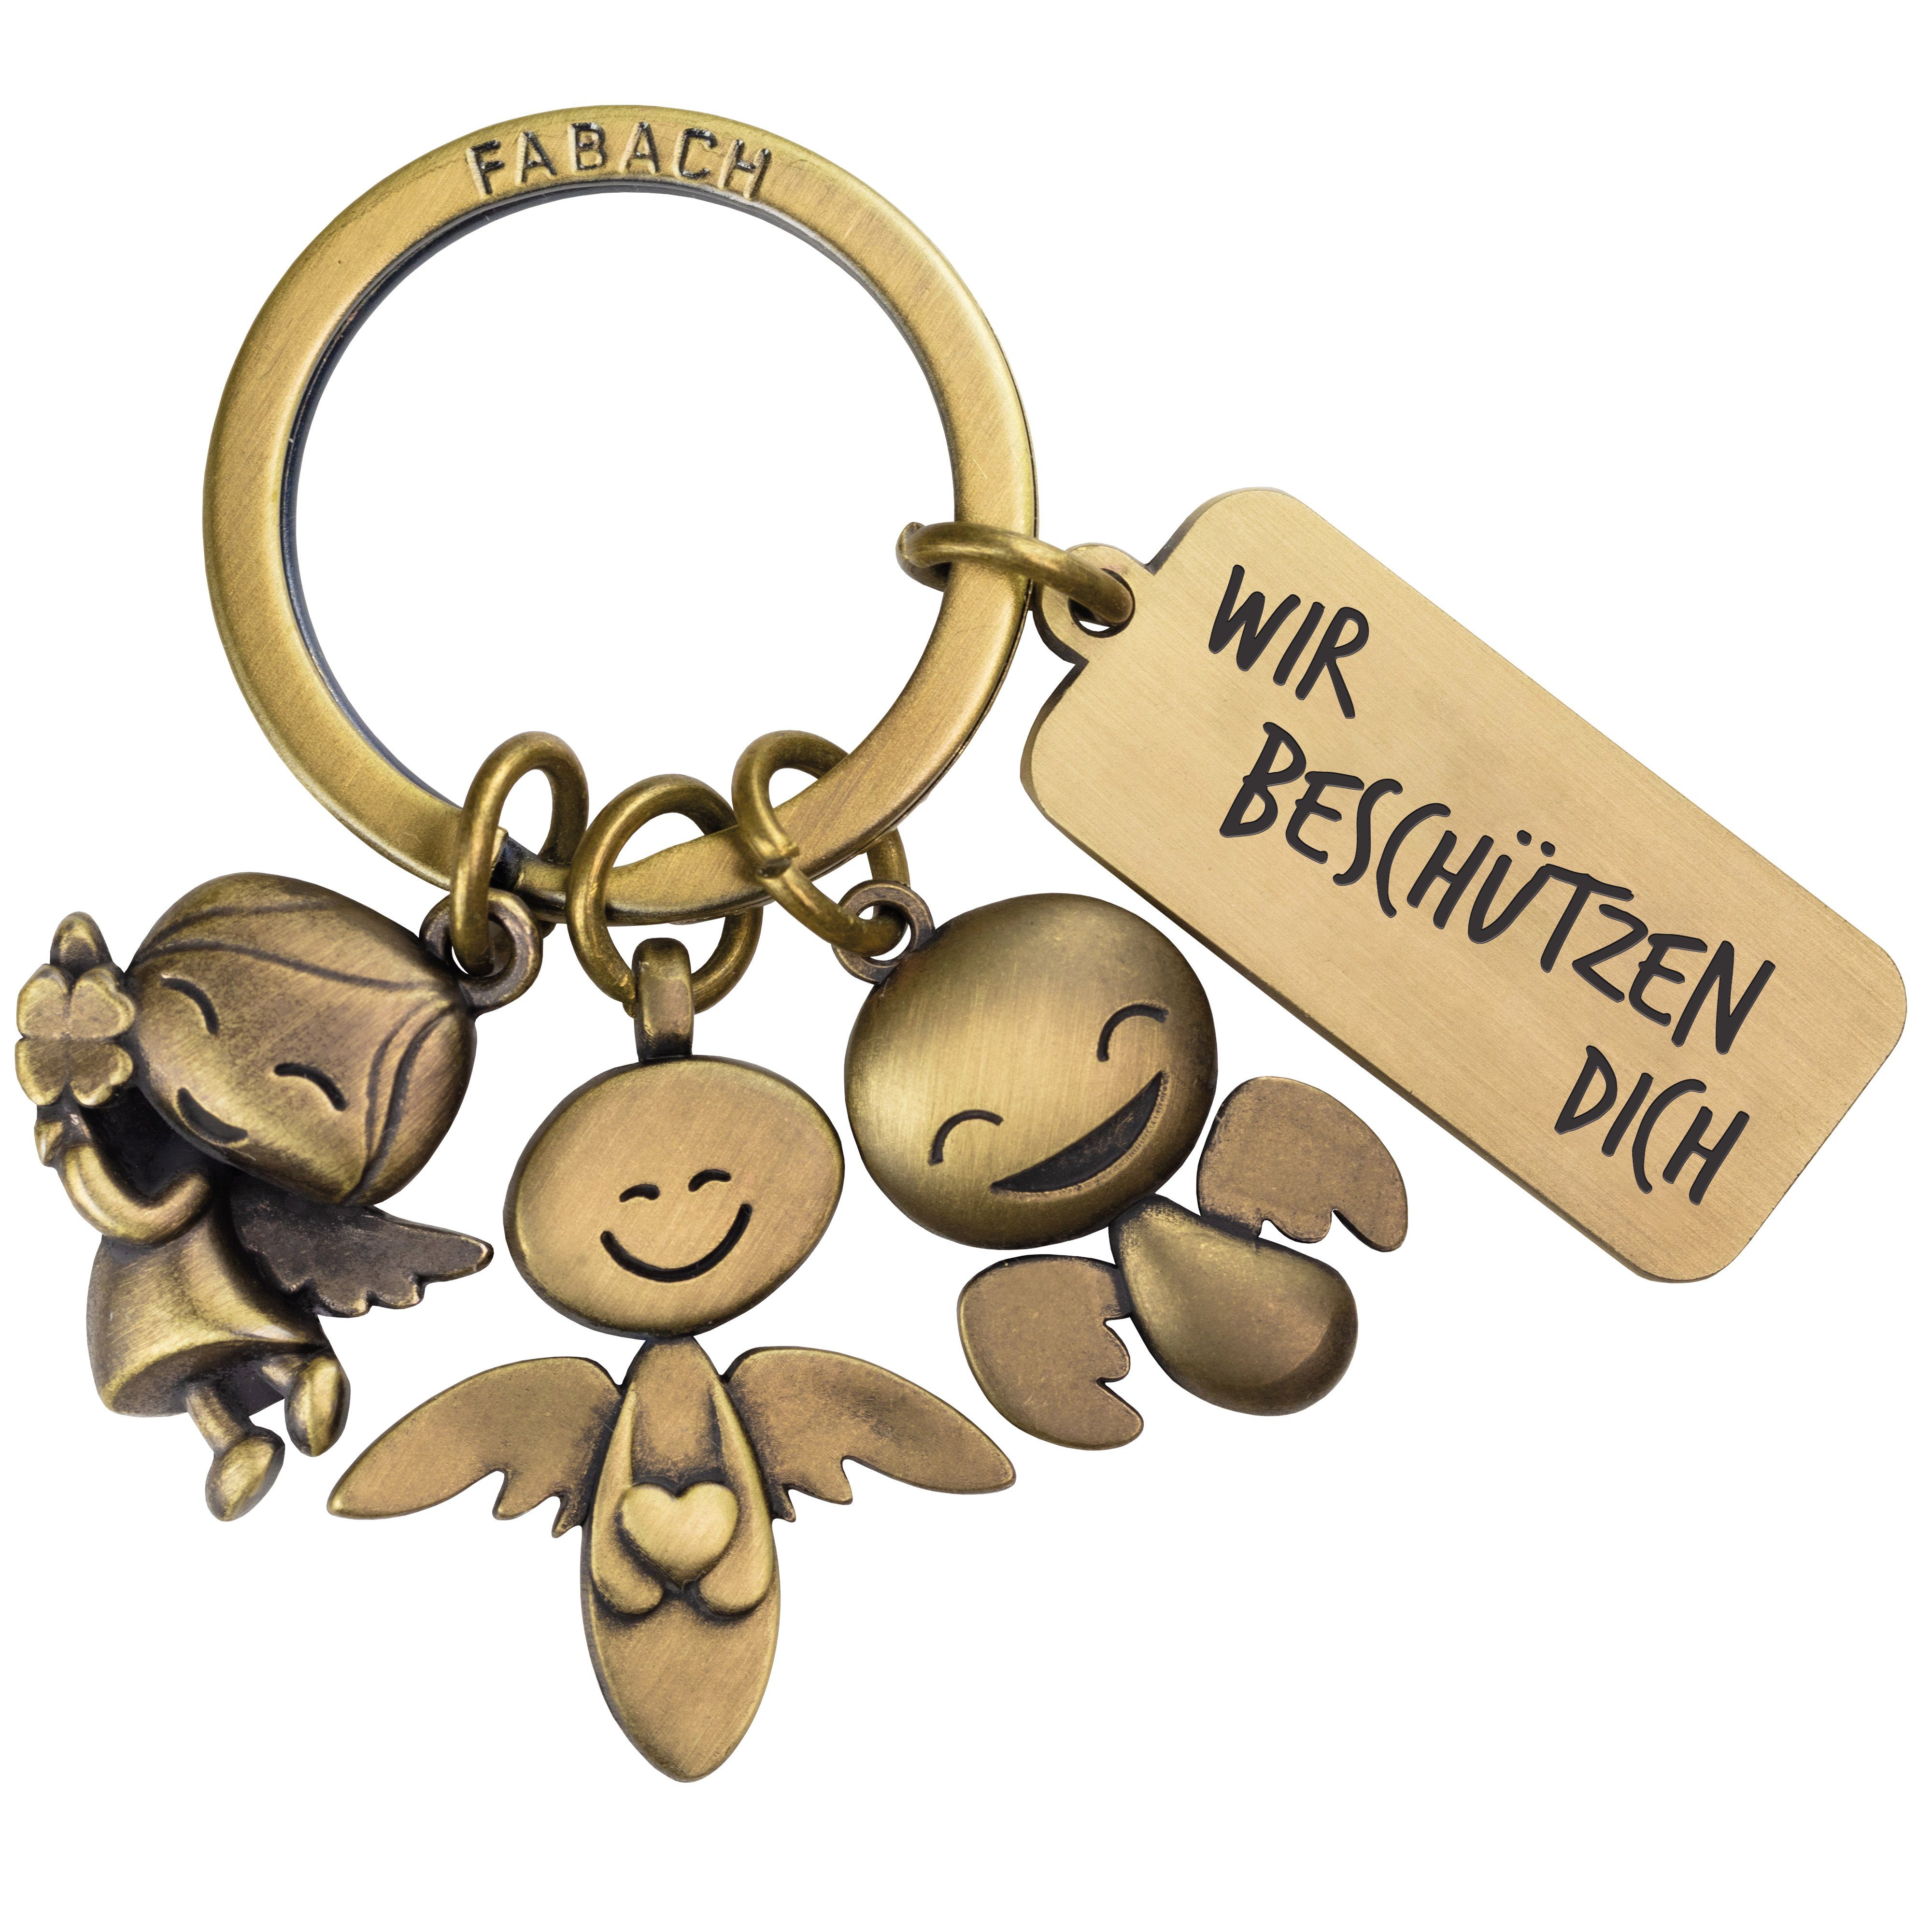 FABACH Schlüsselanhänger Schlüsselanhänger 3 Engel "Fahr vorsichtig - Wir beschützen Dich" Antique Bronze